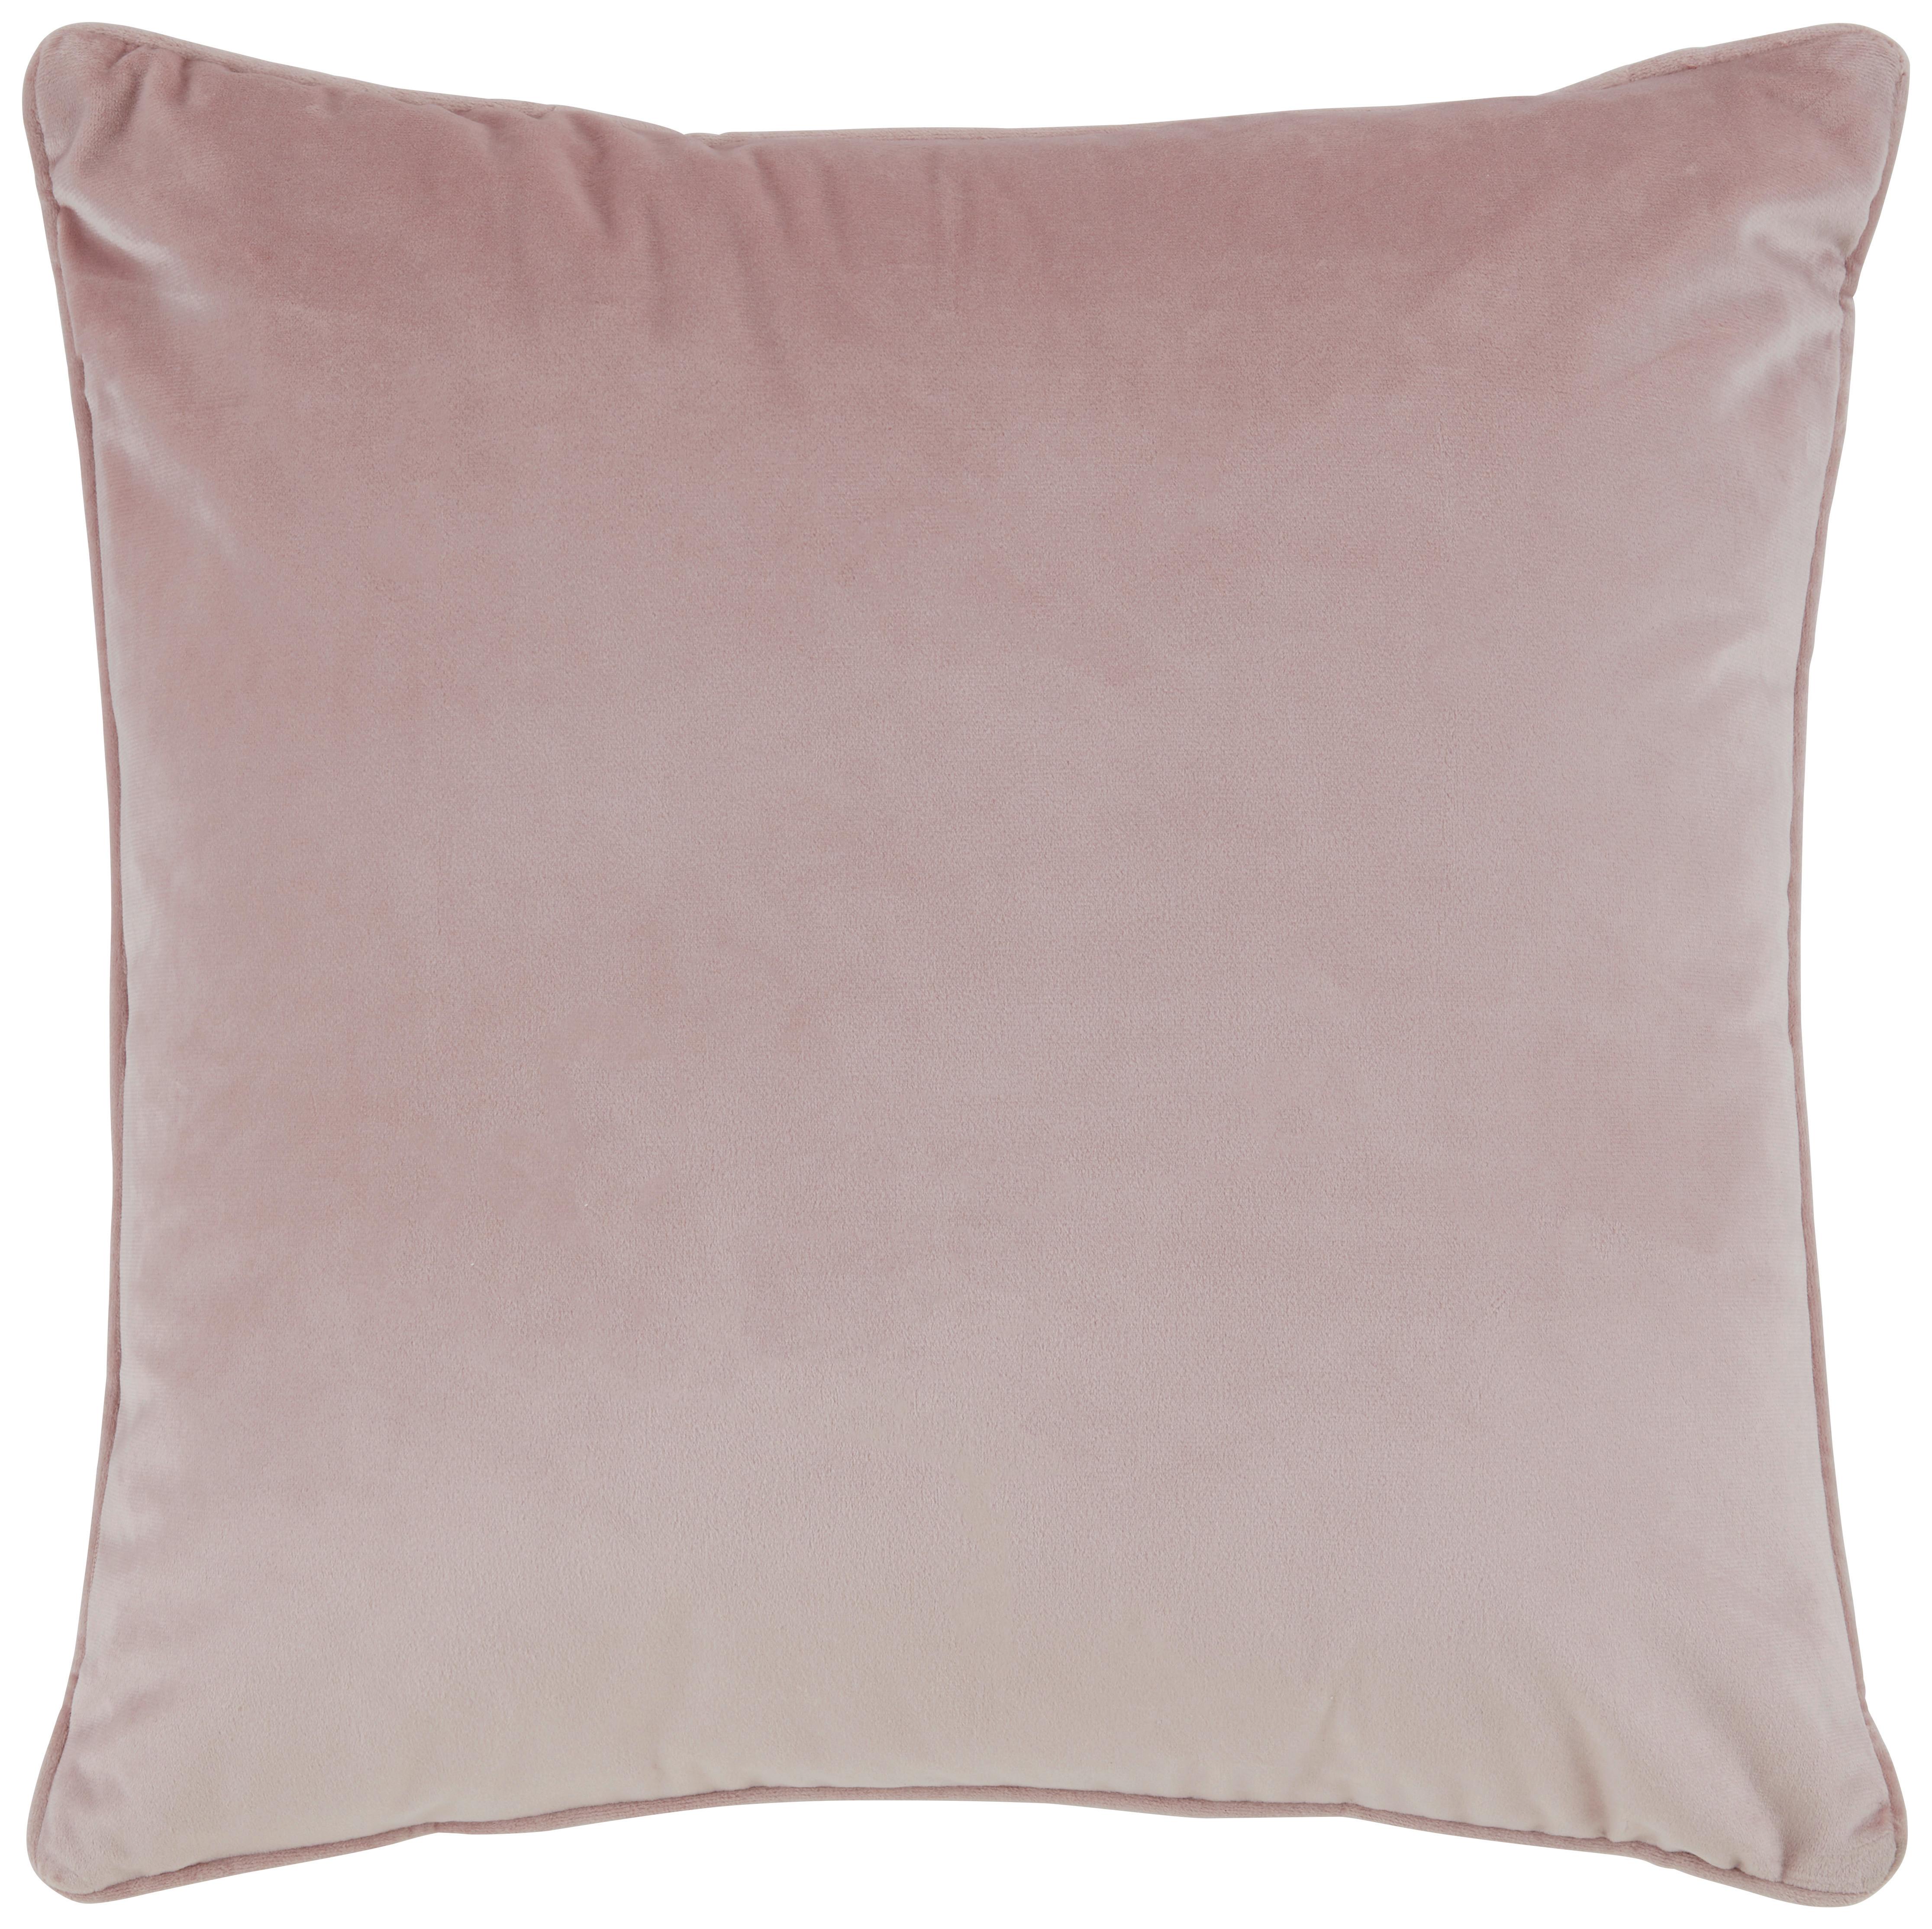 Zierkissen Viola in Rosa ca. 45x45cm - Rosa, Konventionell, Textil (45/45cm) - Premium Living